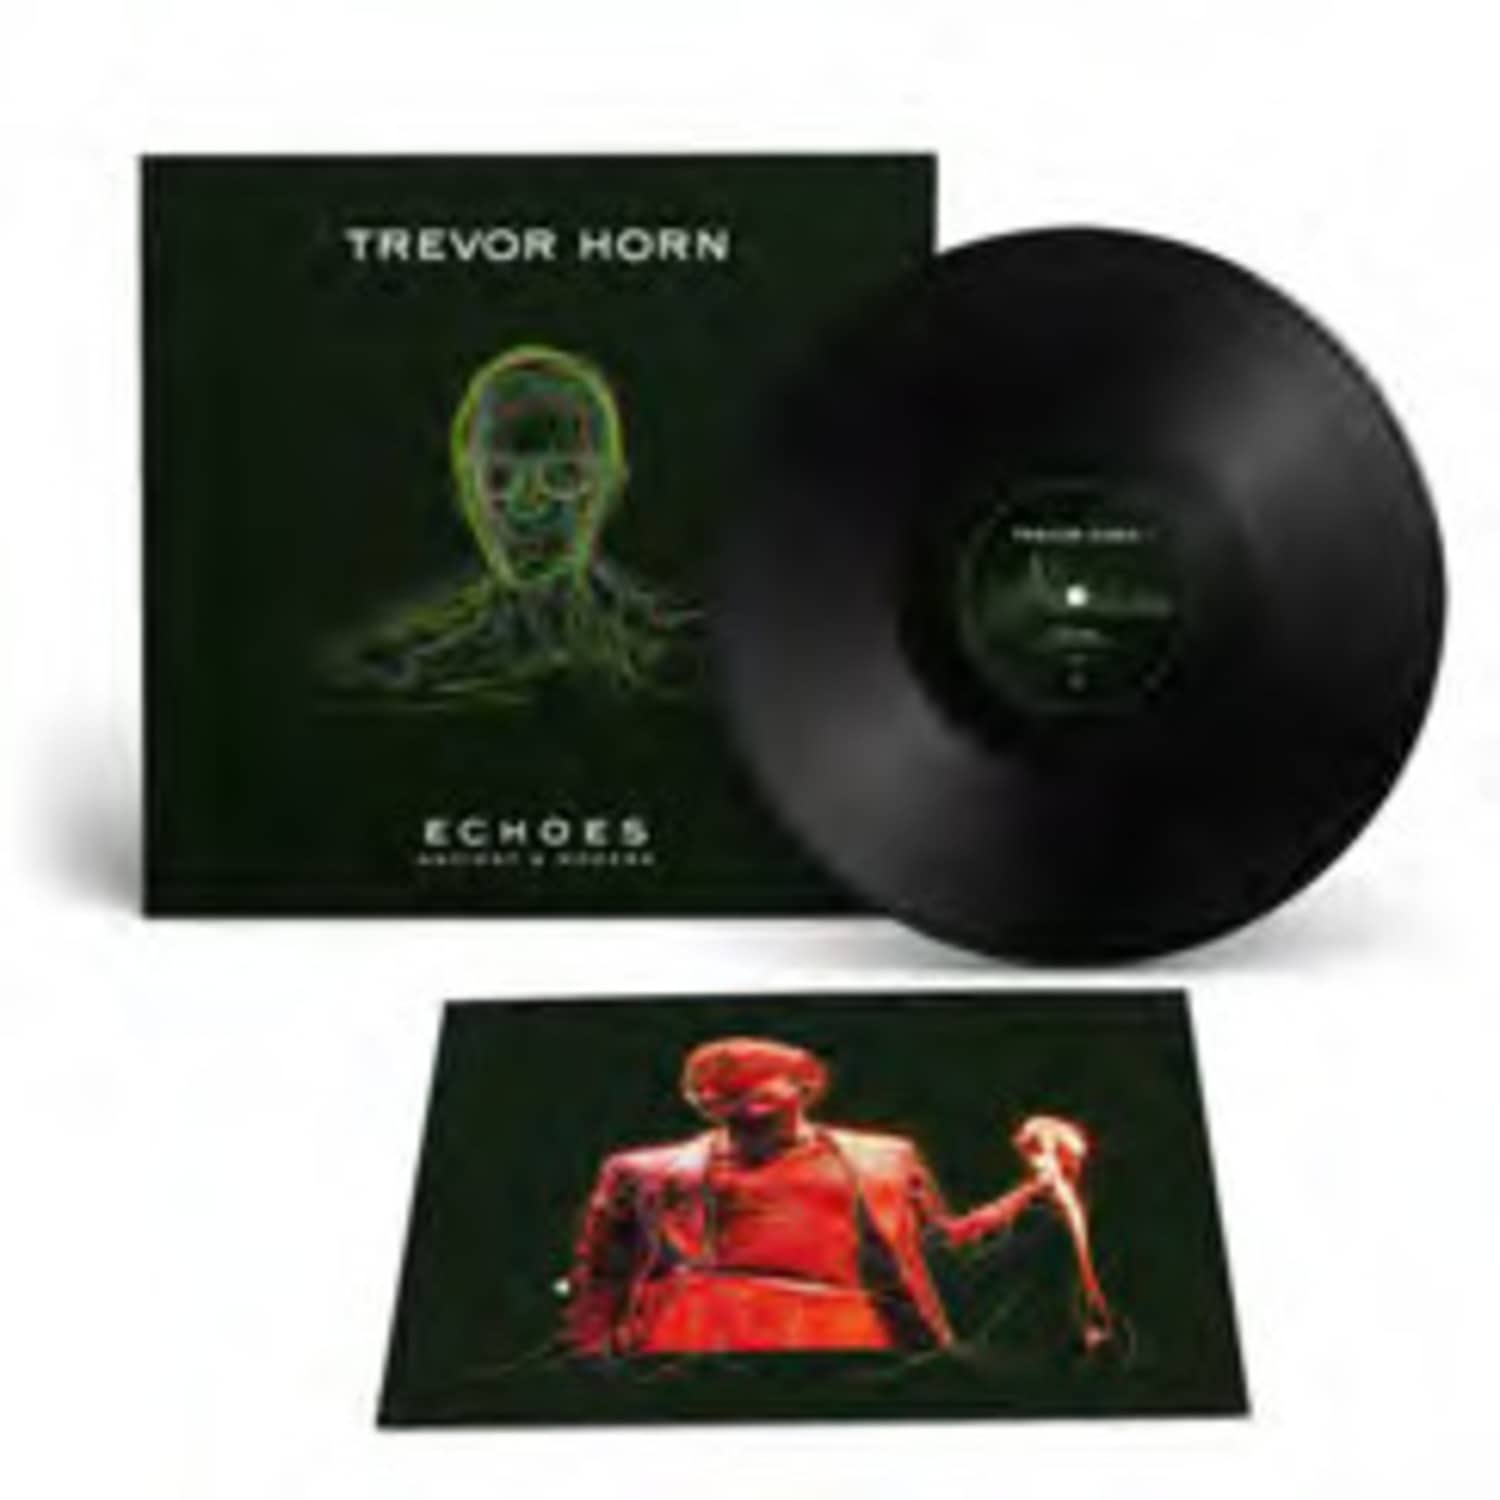 Trevor Horn - ECHOES: ANCIENT & MODERN 